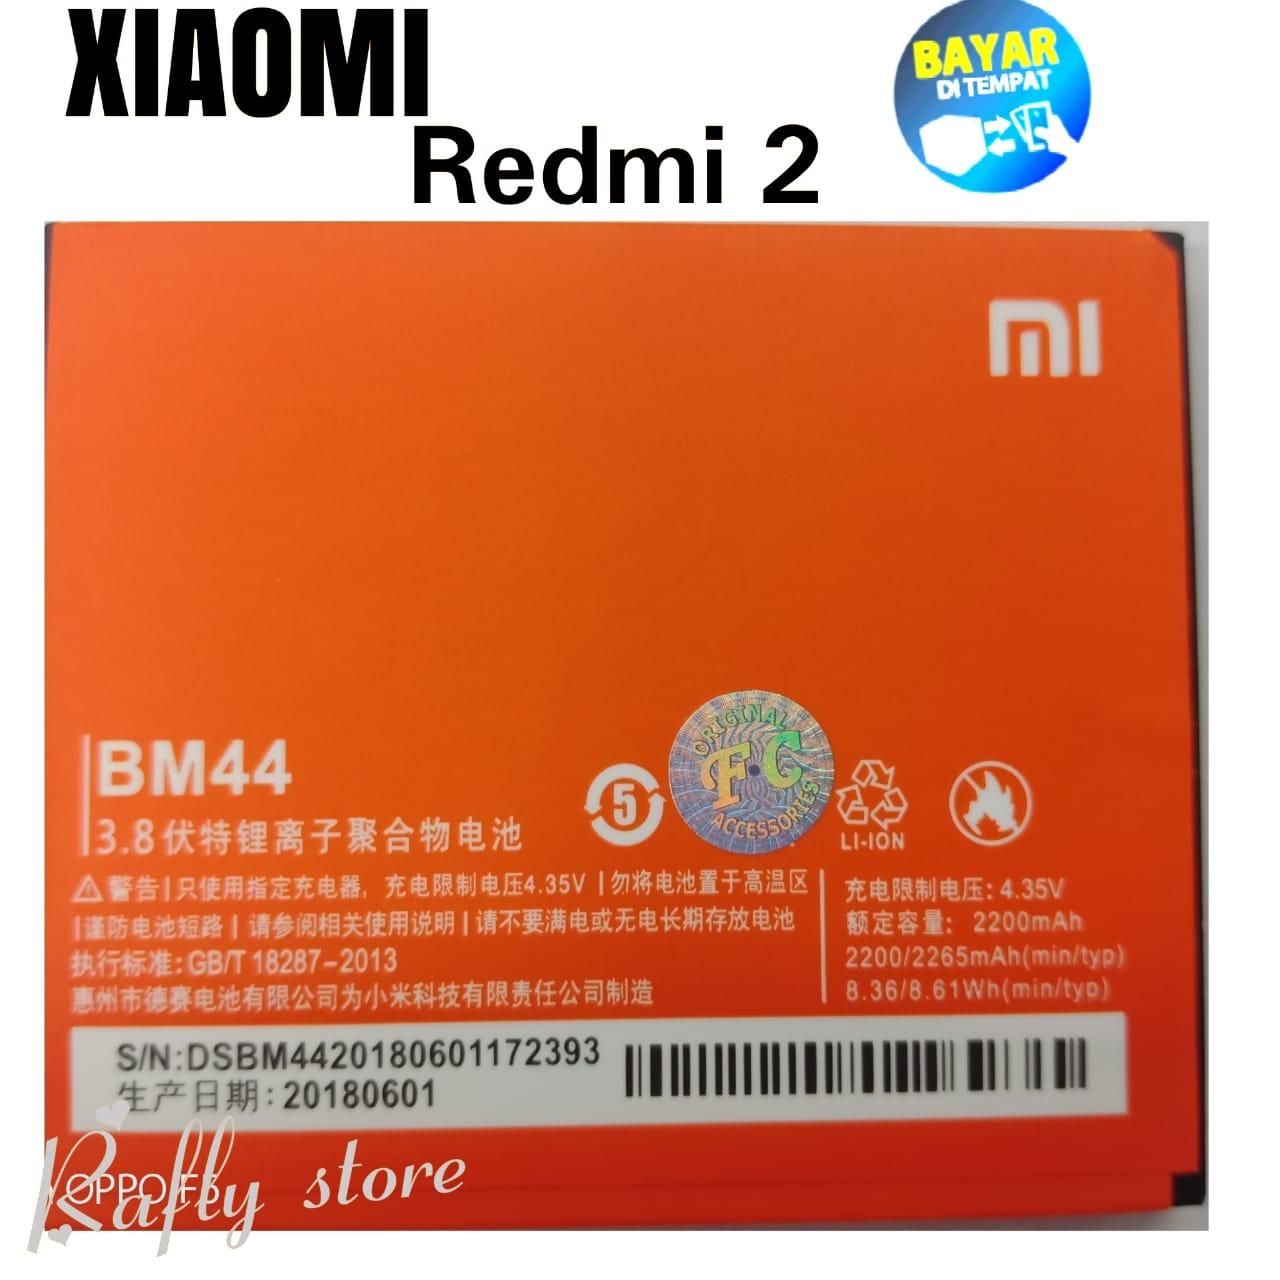 Rafly; Batrai Xiaomi BM44 (Redmi 2) Baterai Android Batere Handphone Xiaomi Batre Battery BM44 For Xiaomi Redmi 2 2200mAh / Rafly store